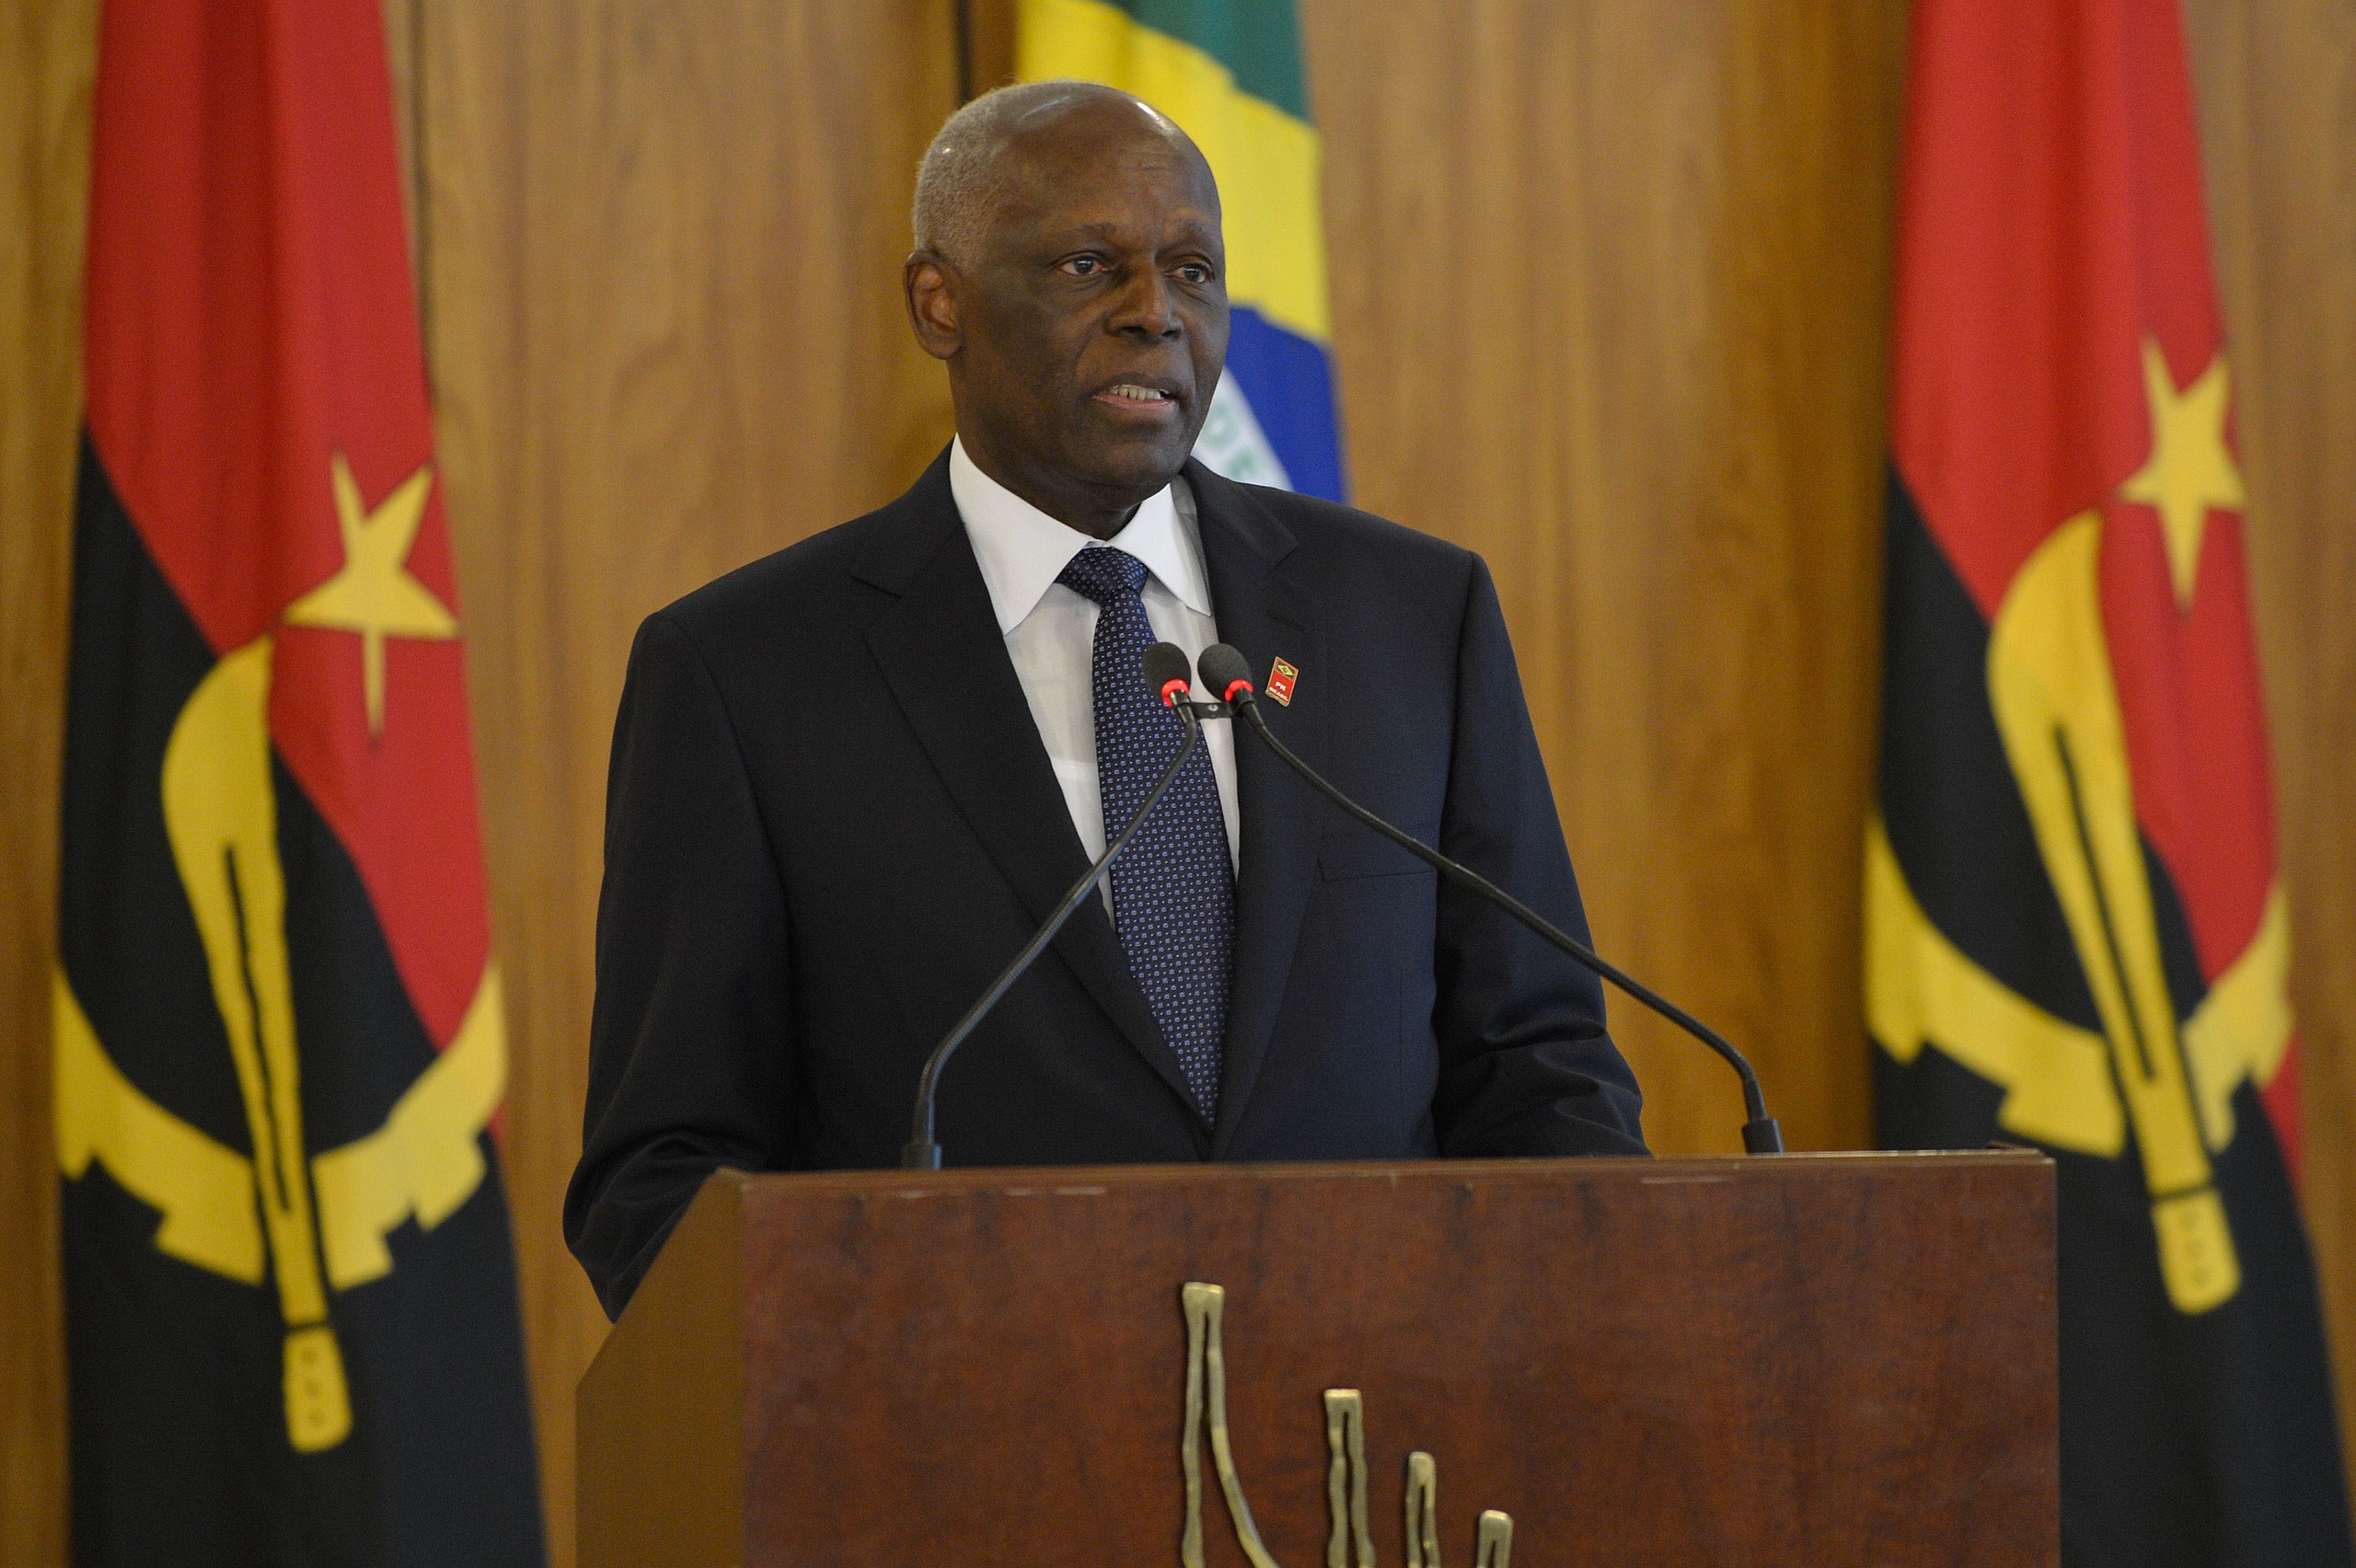 Angola’s former president Dos Santos dies in Spain